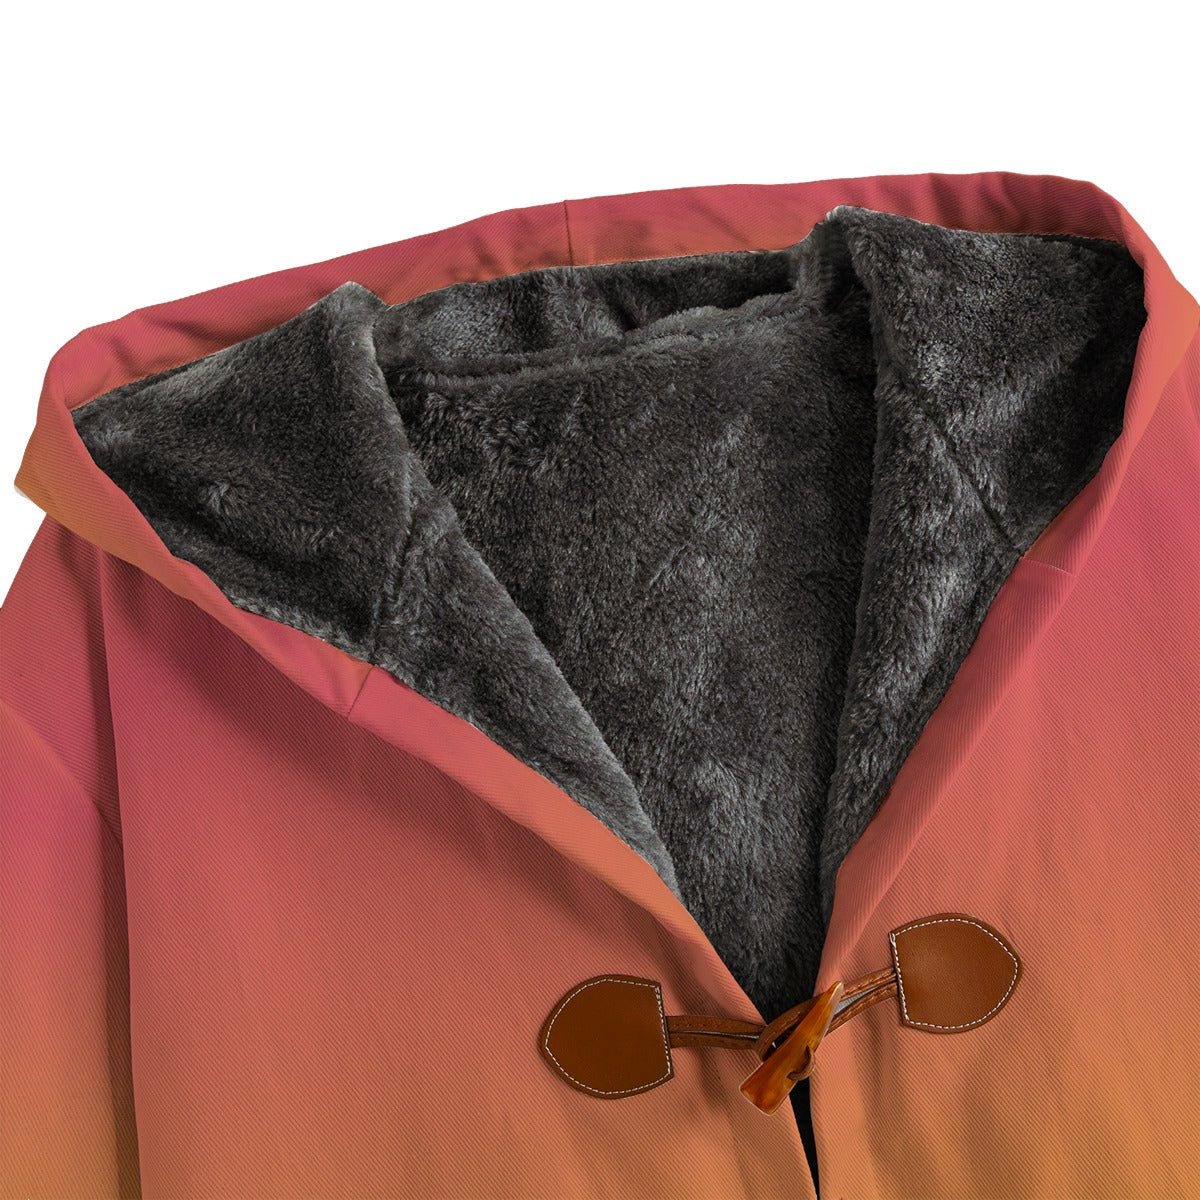 Rainbow Coat | Jackets & Hoodies | All Around Artsy Fashion